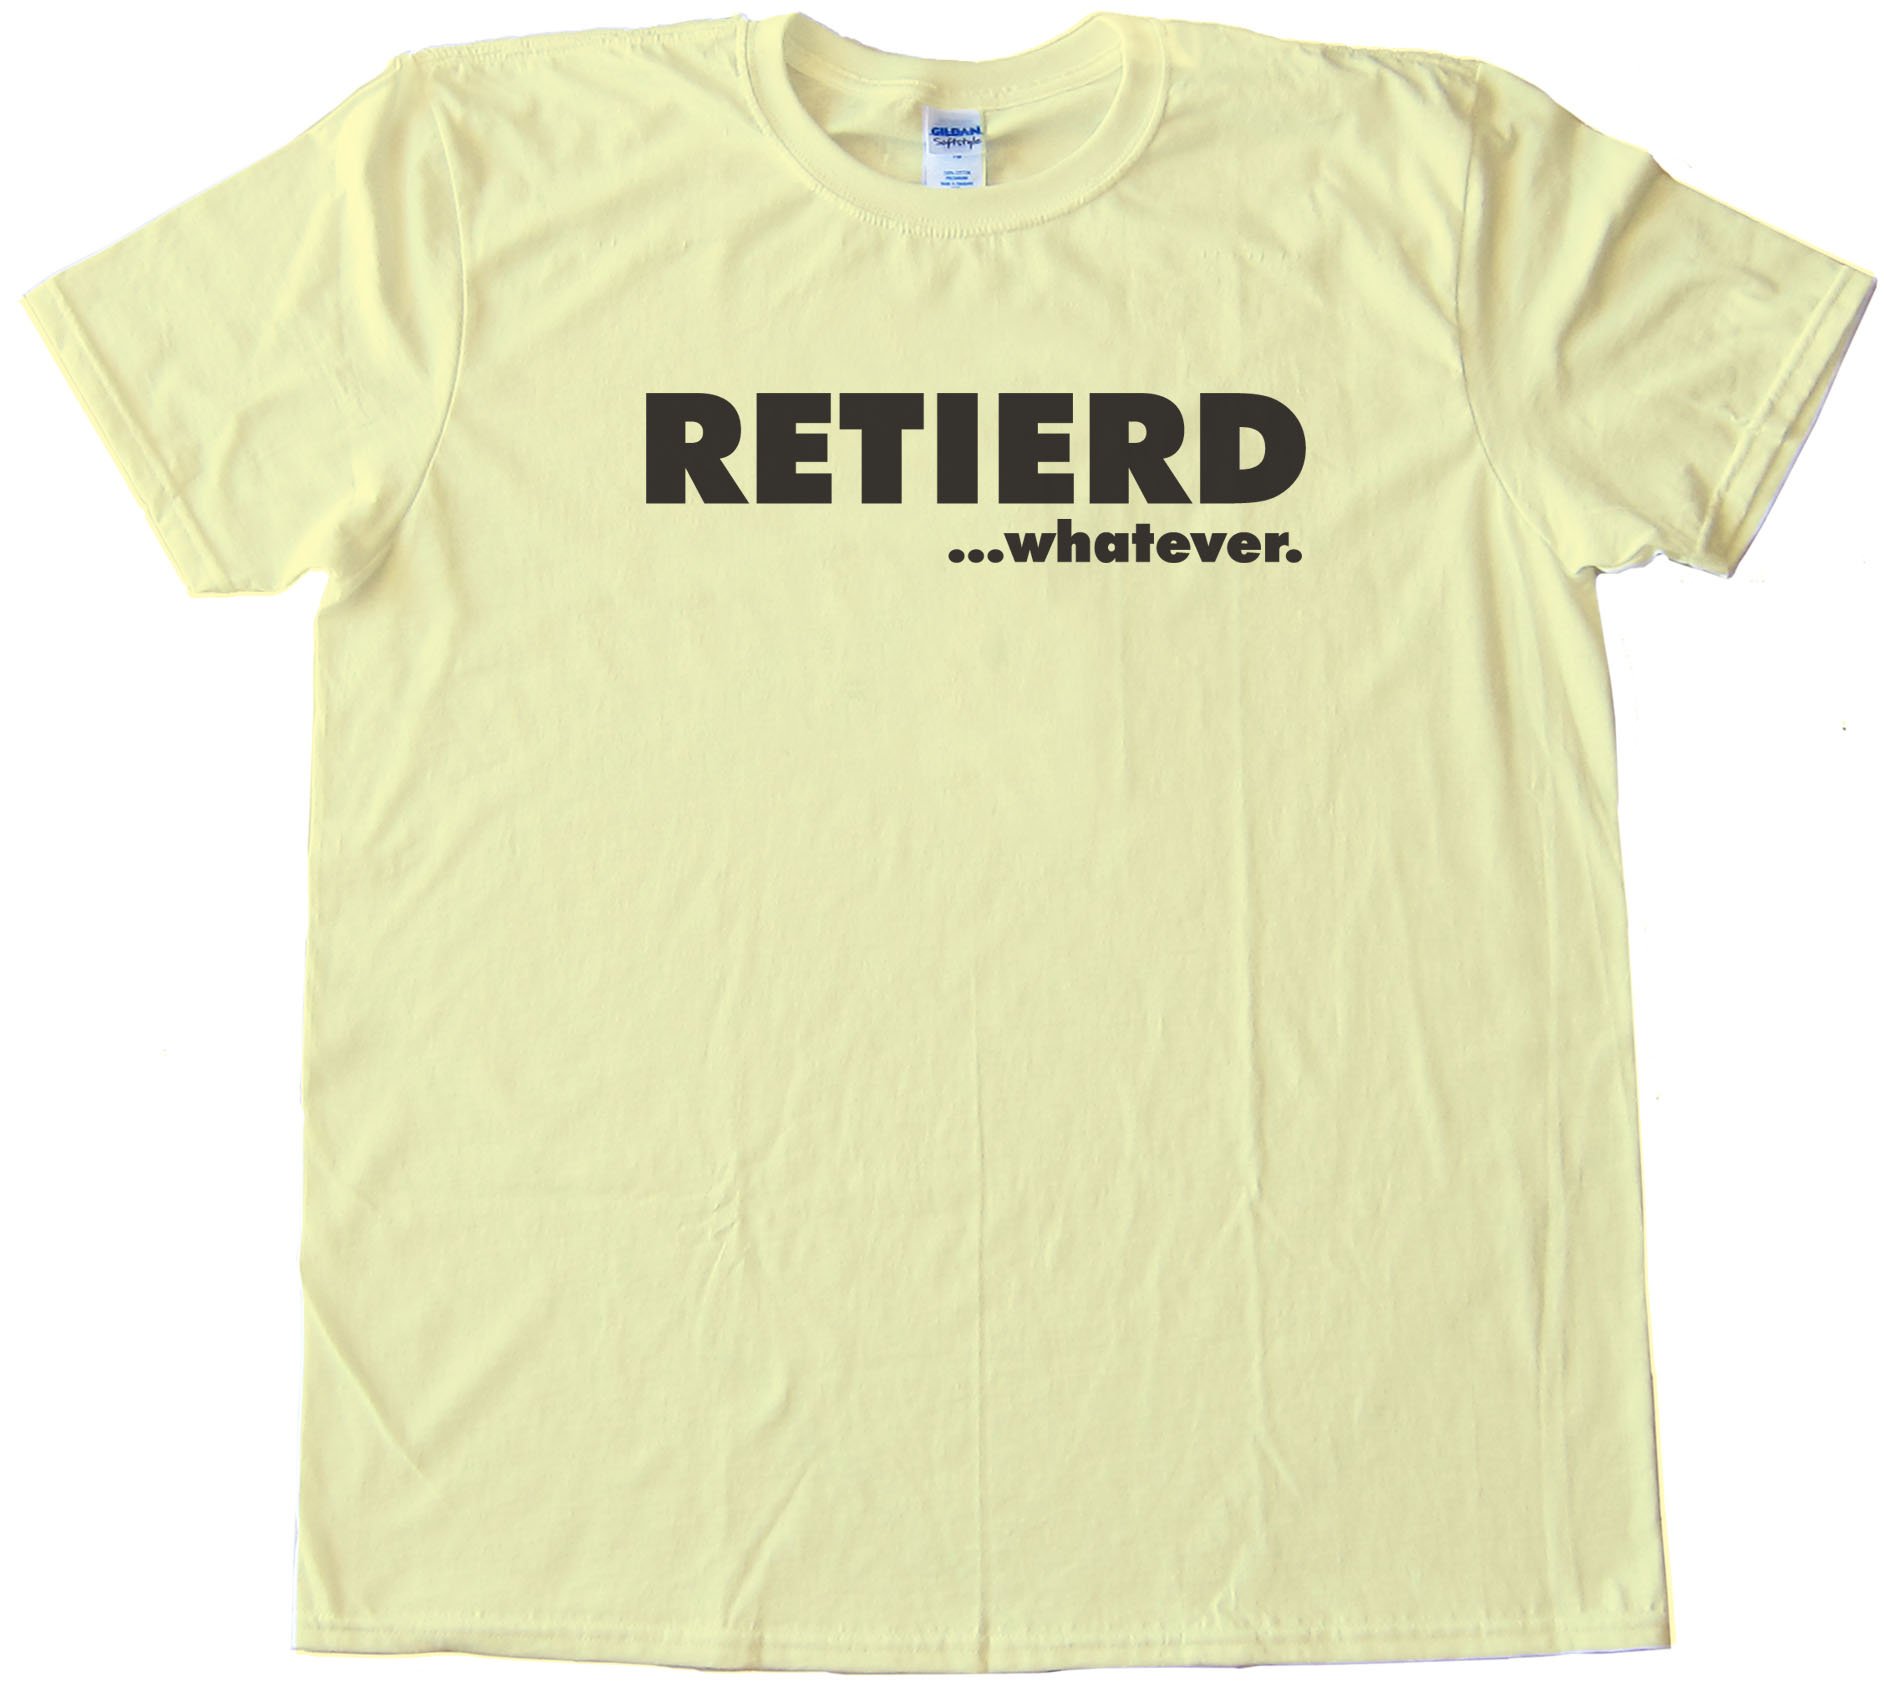 Retired - Retierd...Whatever... Tee Shirt